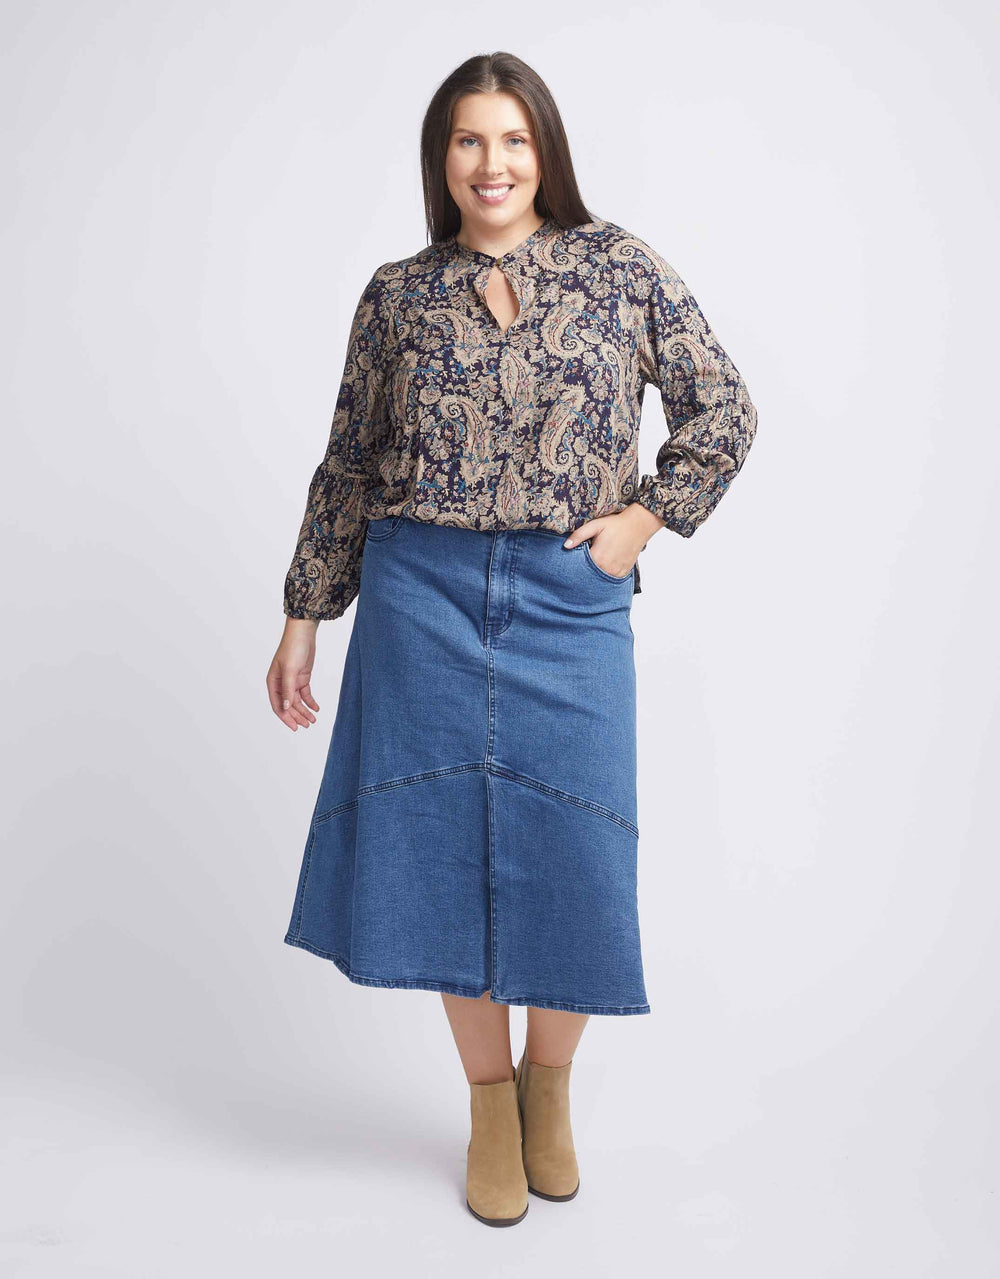 betty-basics-everly-denim-skirt-mid-denim-blue-womens-plus-size-clothing